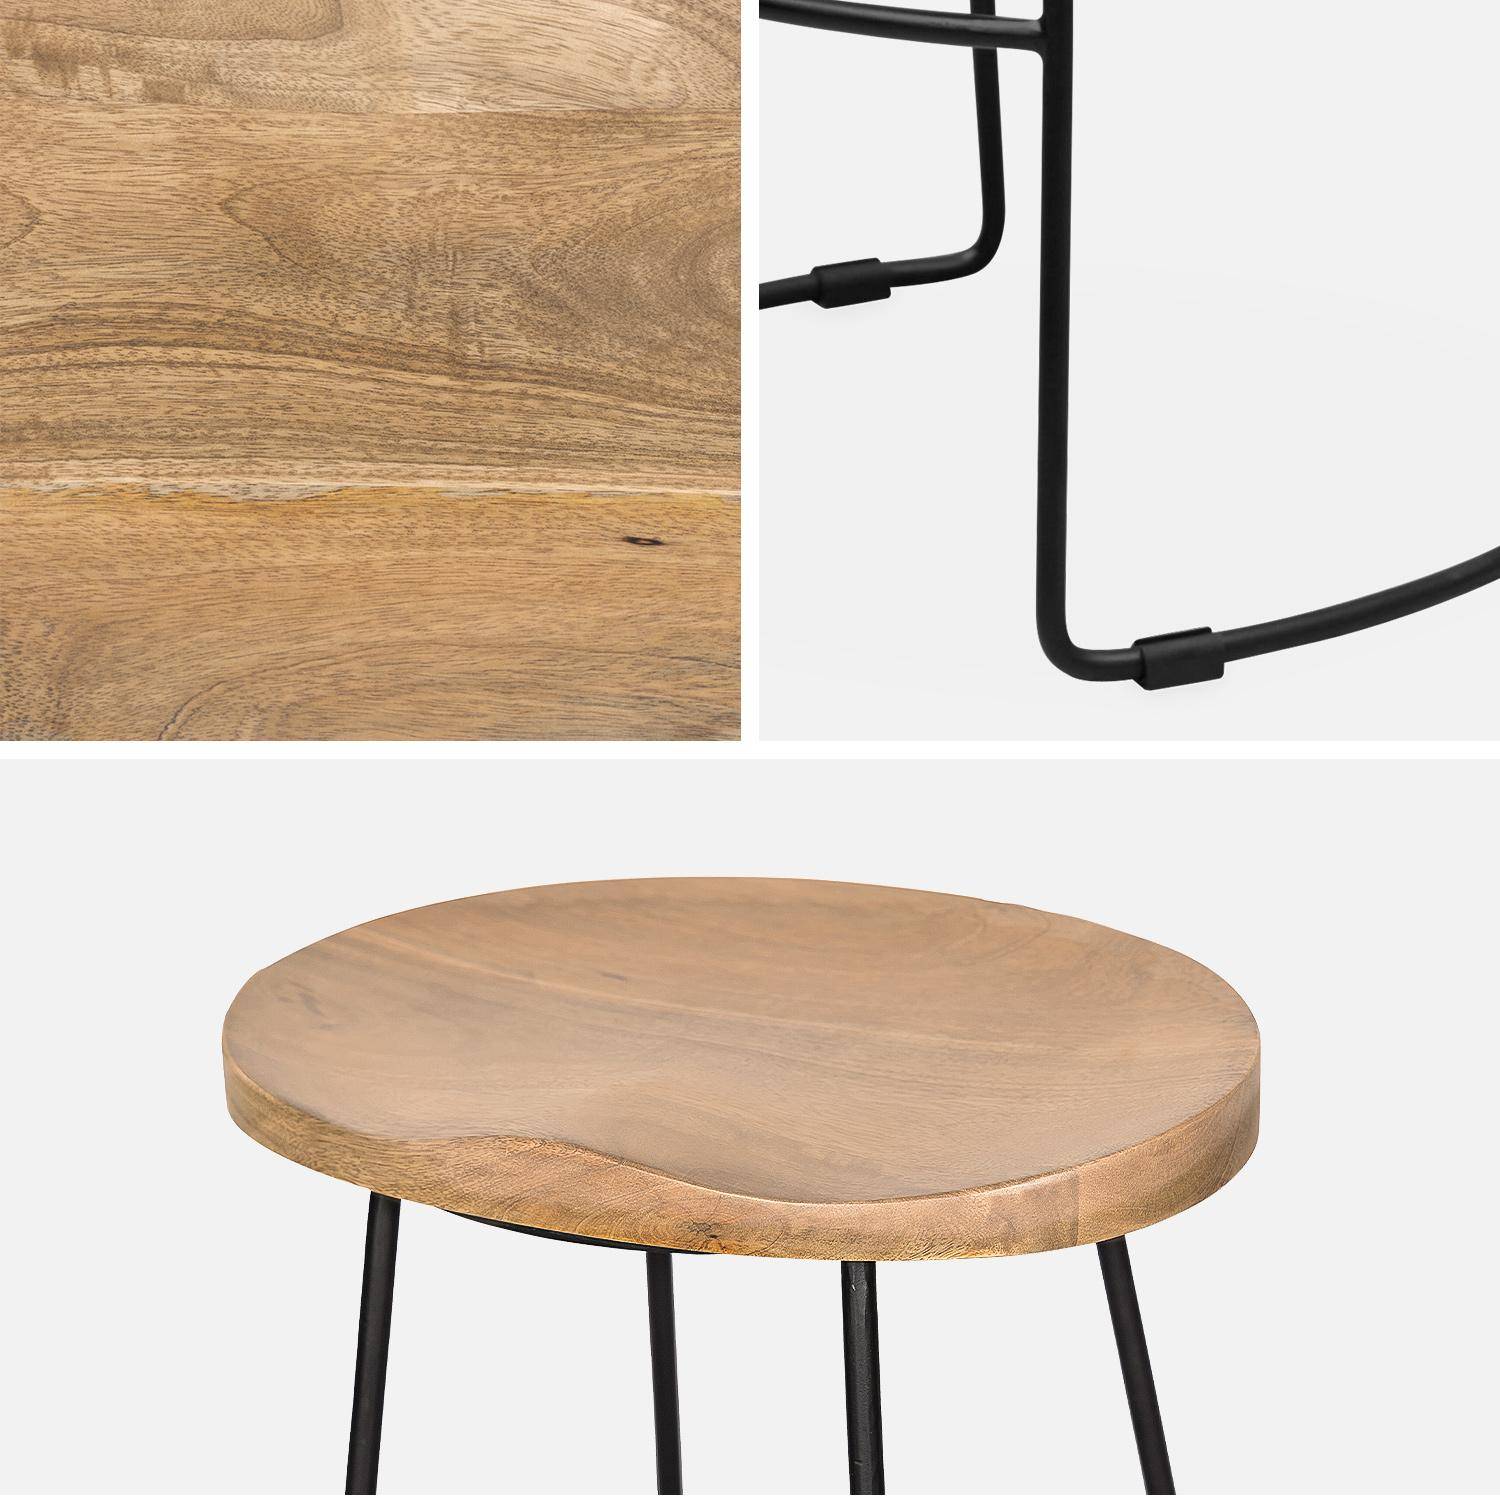 Pair of industrial metal and wooden bar stools, 47x40x75cm, Jaya, Natural, Mango wood seat, black metal legs Photo7